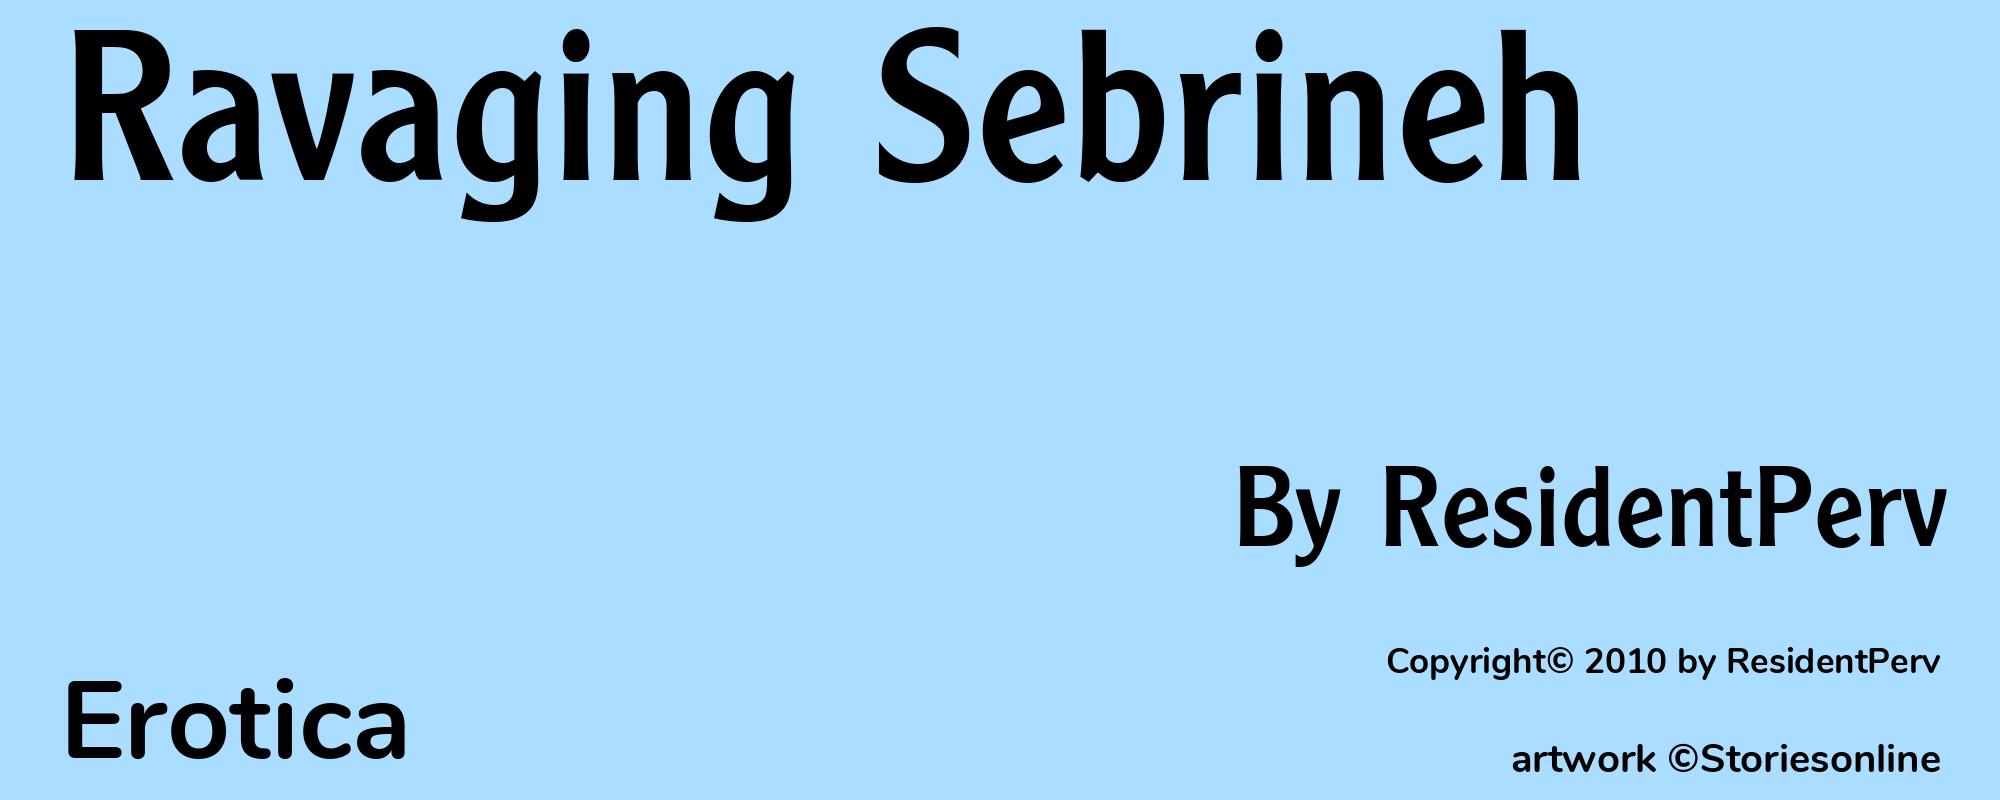 Ravaging Sebrineh - Cover